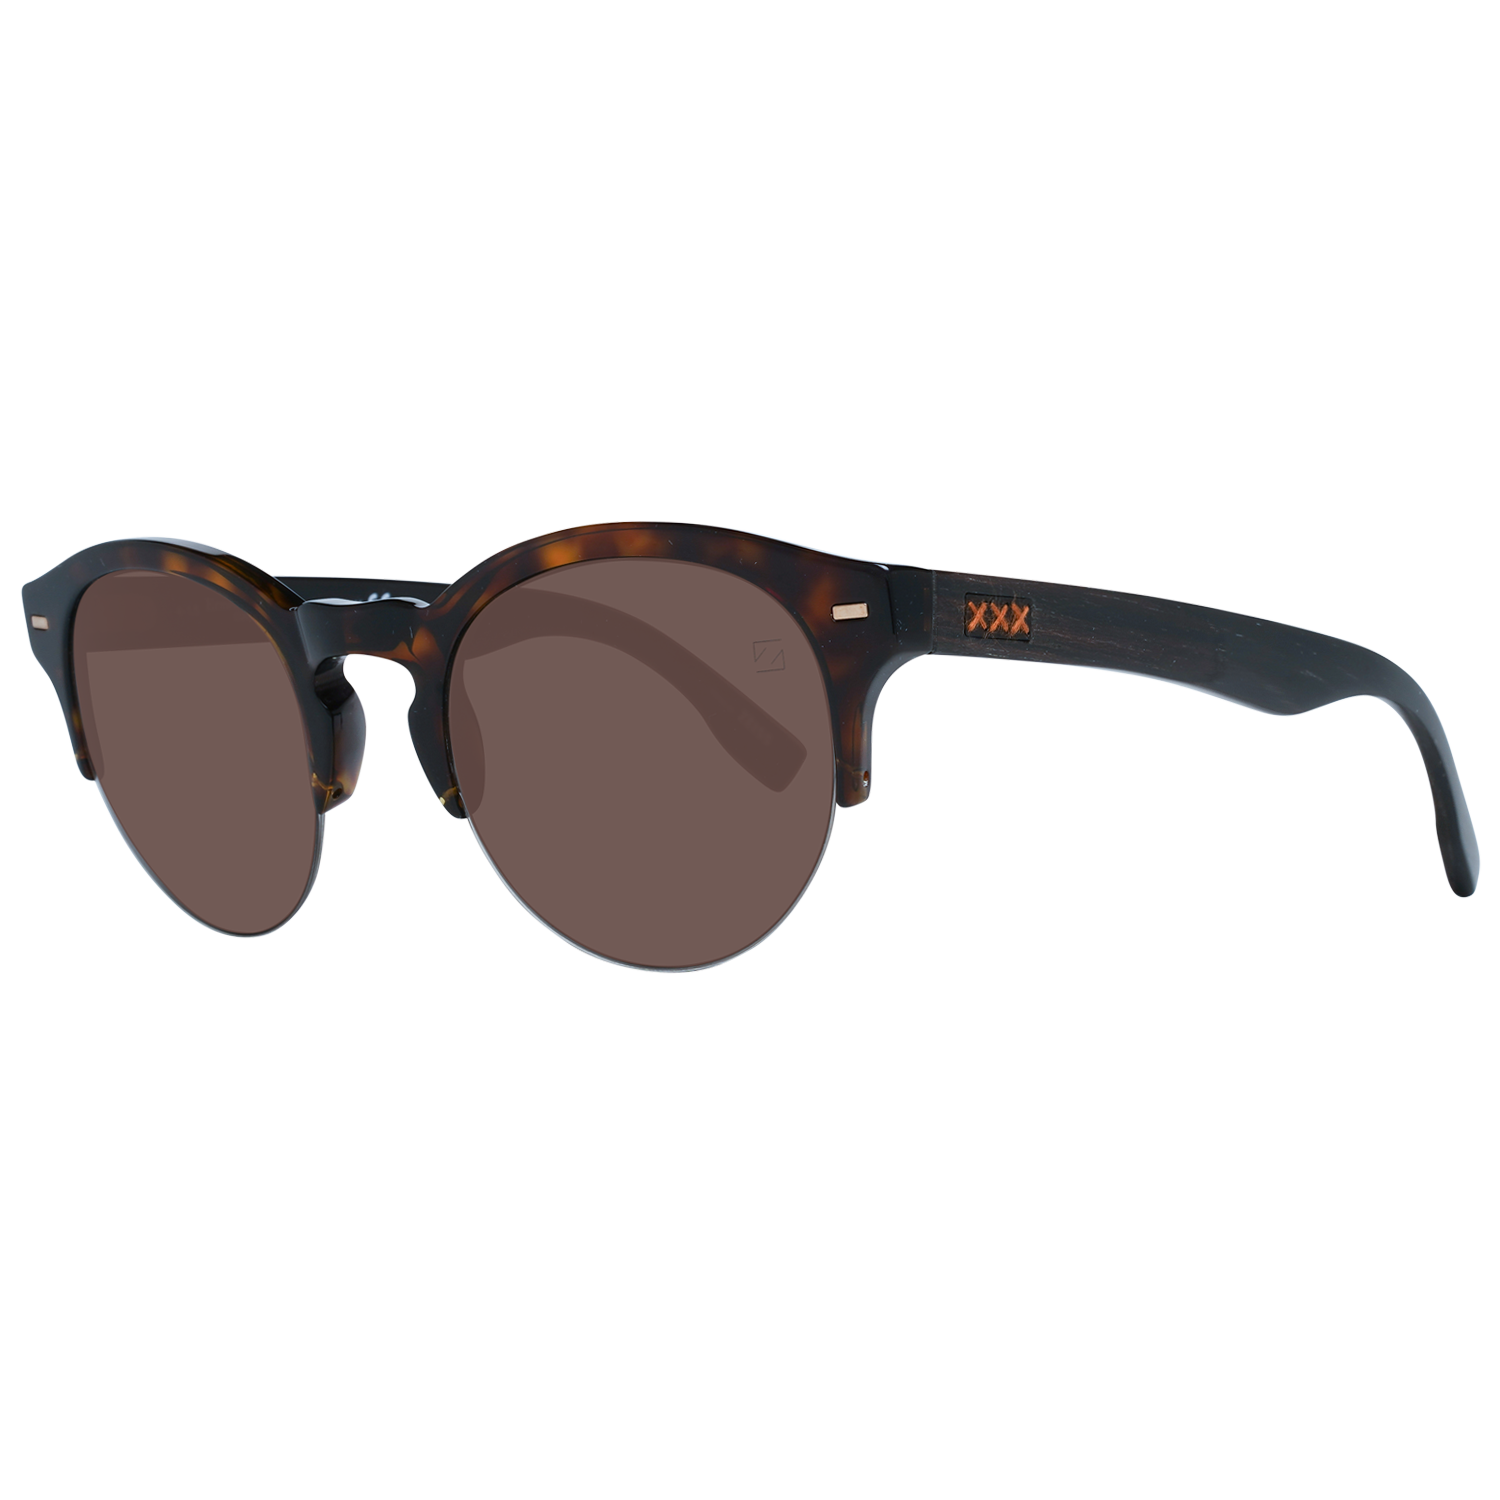 Zegna Couture Sunglasses Zegna Couture Sunglasses ZC0008 50 52J Eyeglasses Eyewear UK USA Australia 